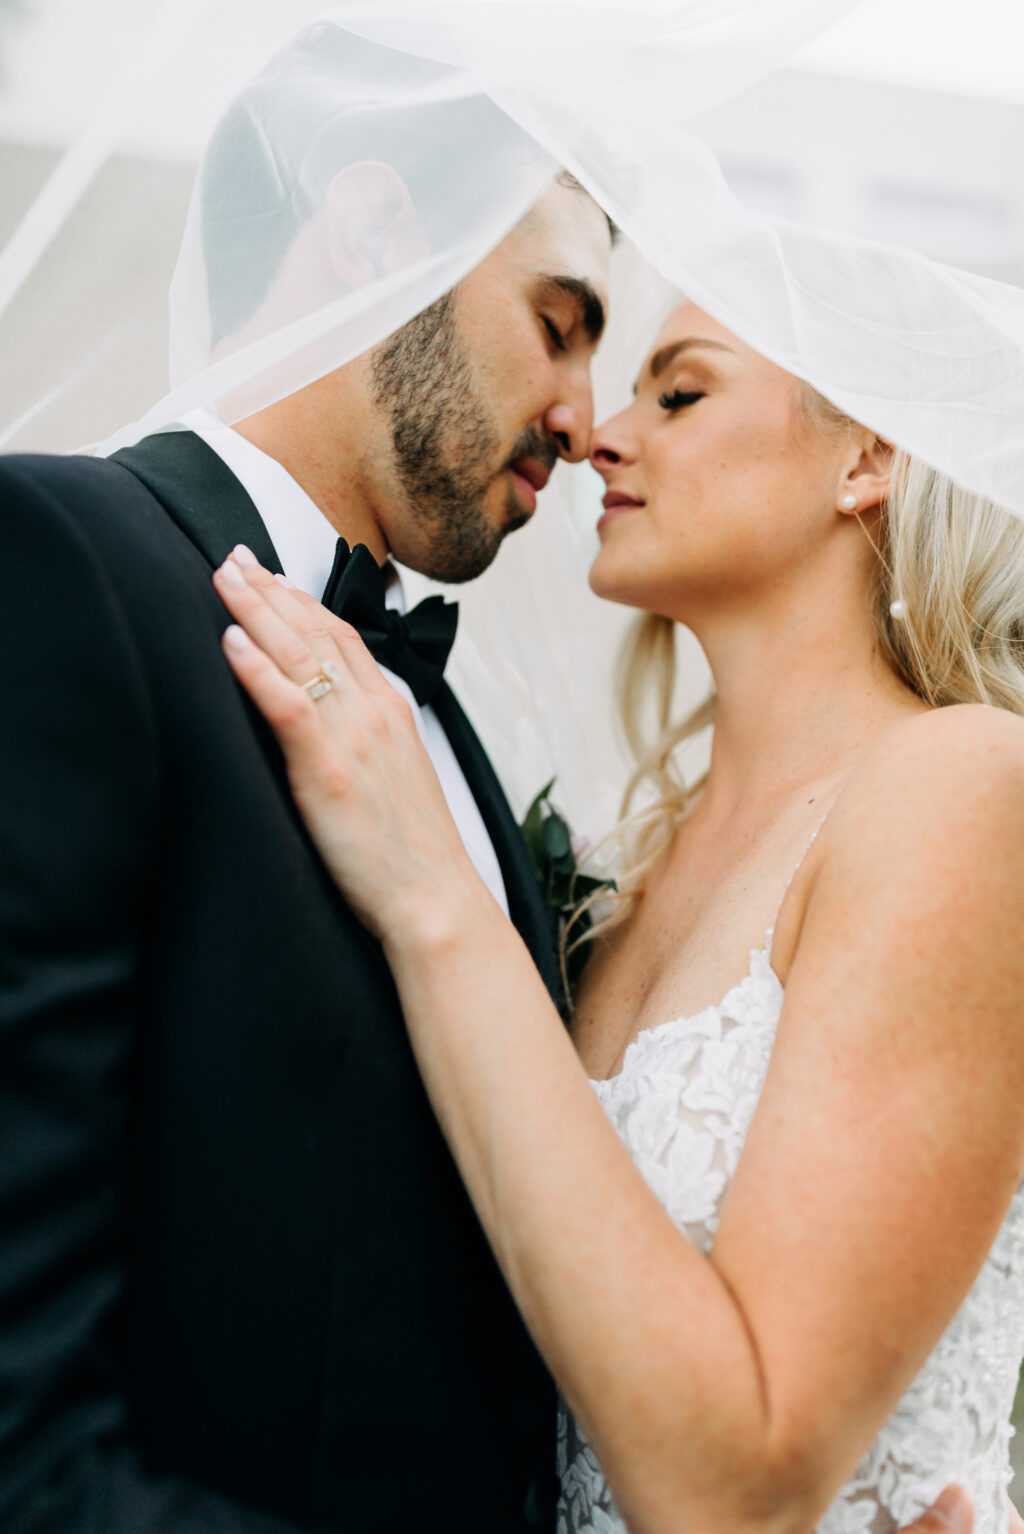 Bride and Groom Veil Wedding Portrait | Tampa Bay Photographer Amber McWhorter Photography | Videographer J&S Media